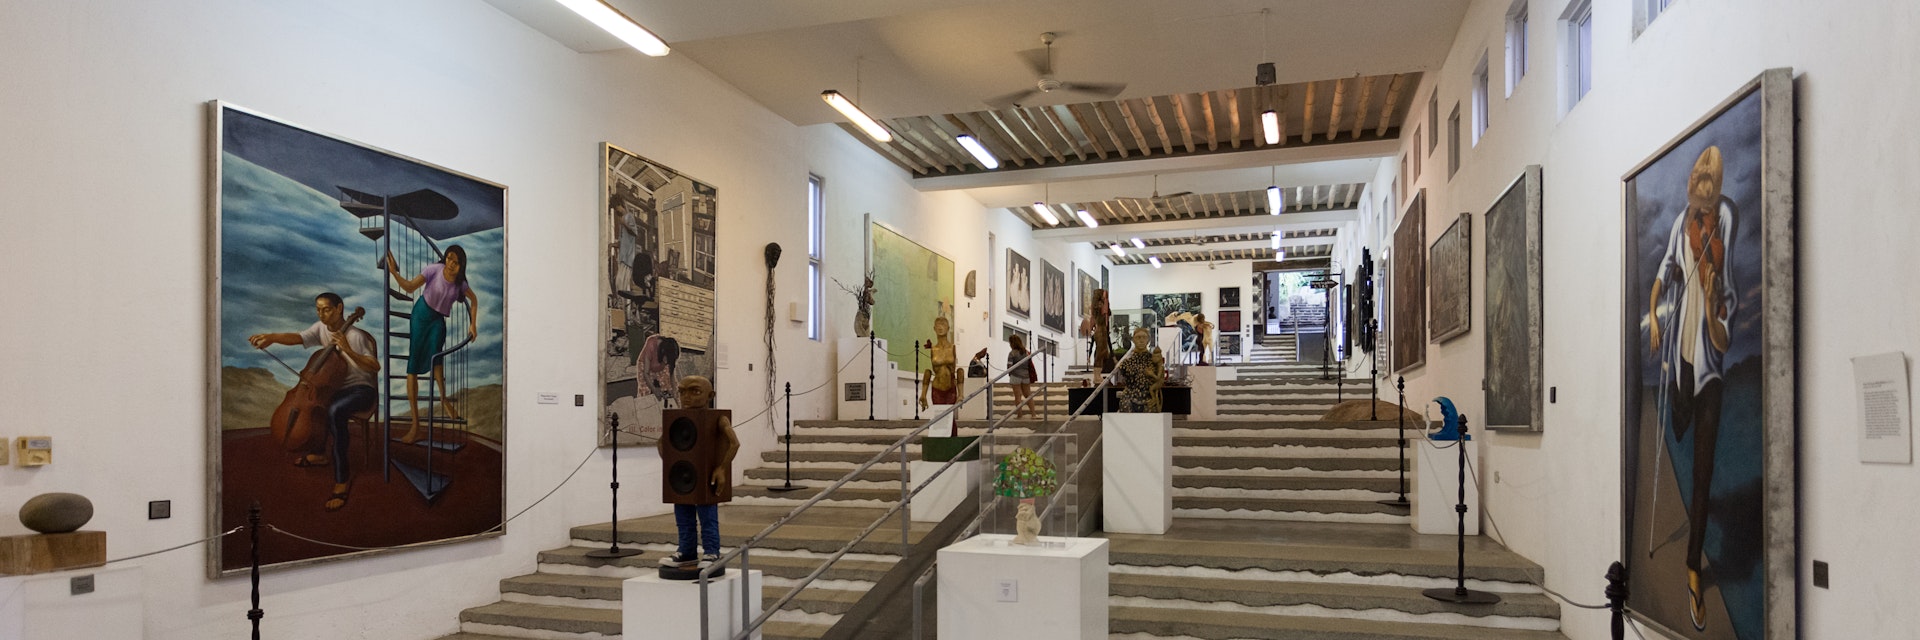 Artwork on display inside the Pinto Art Museum.